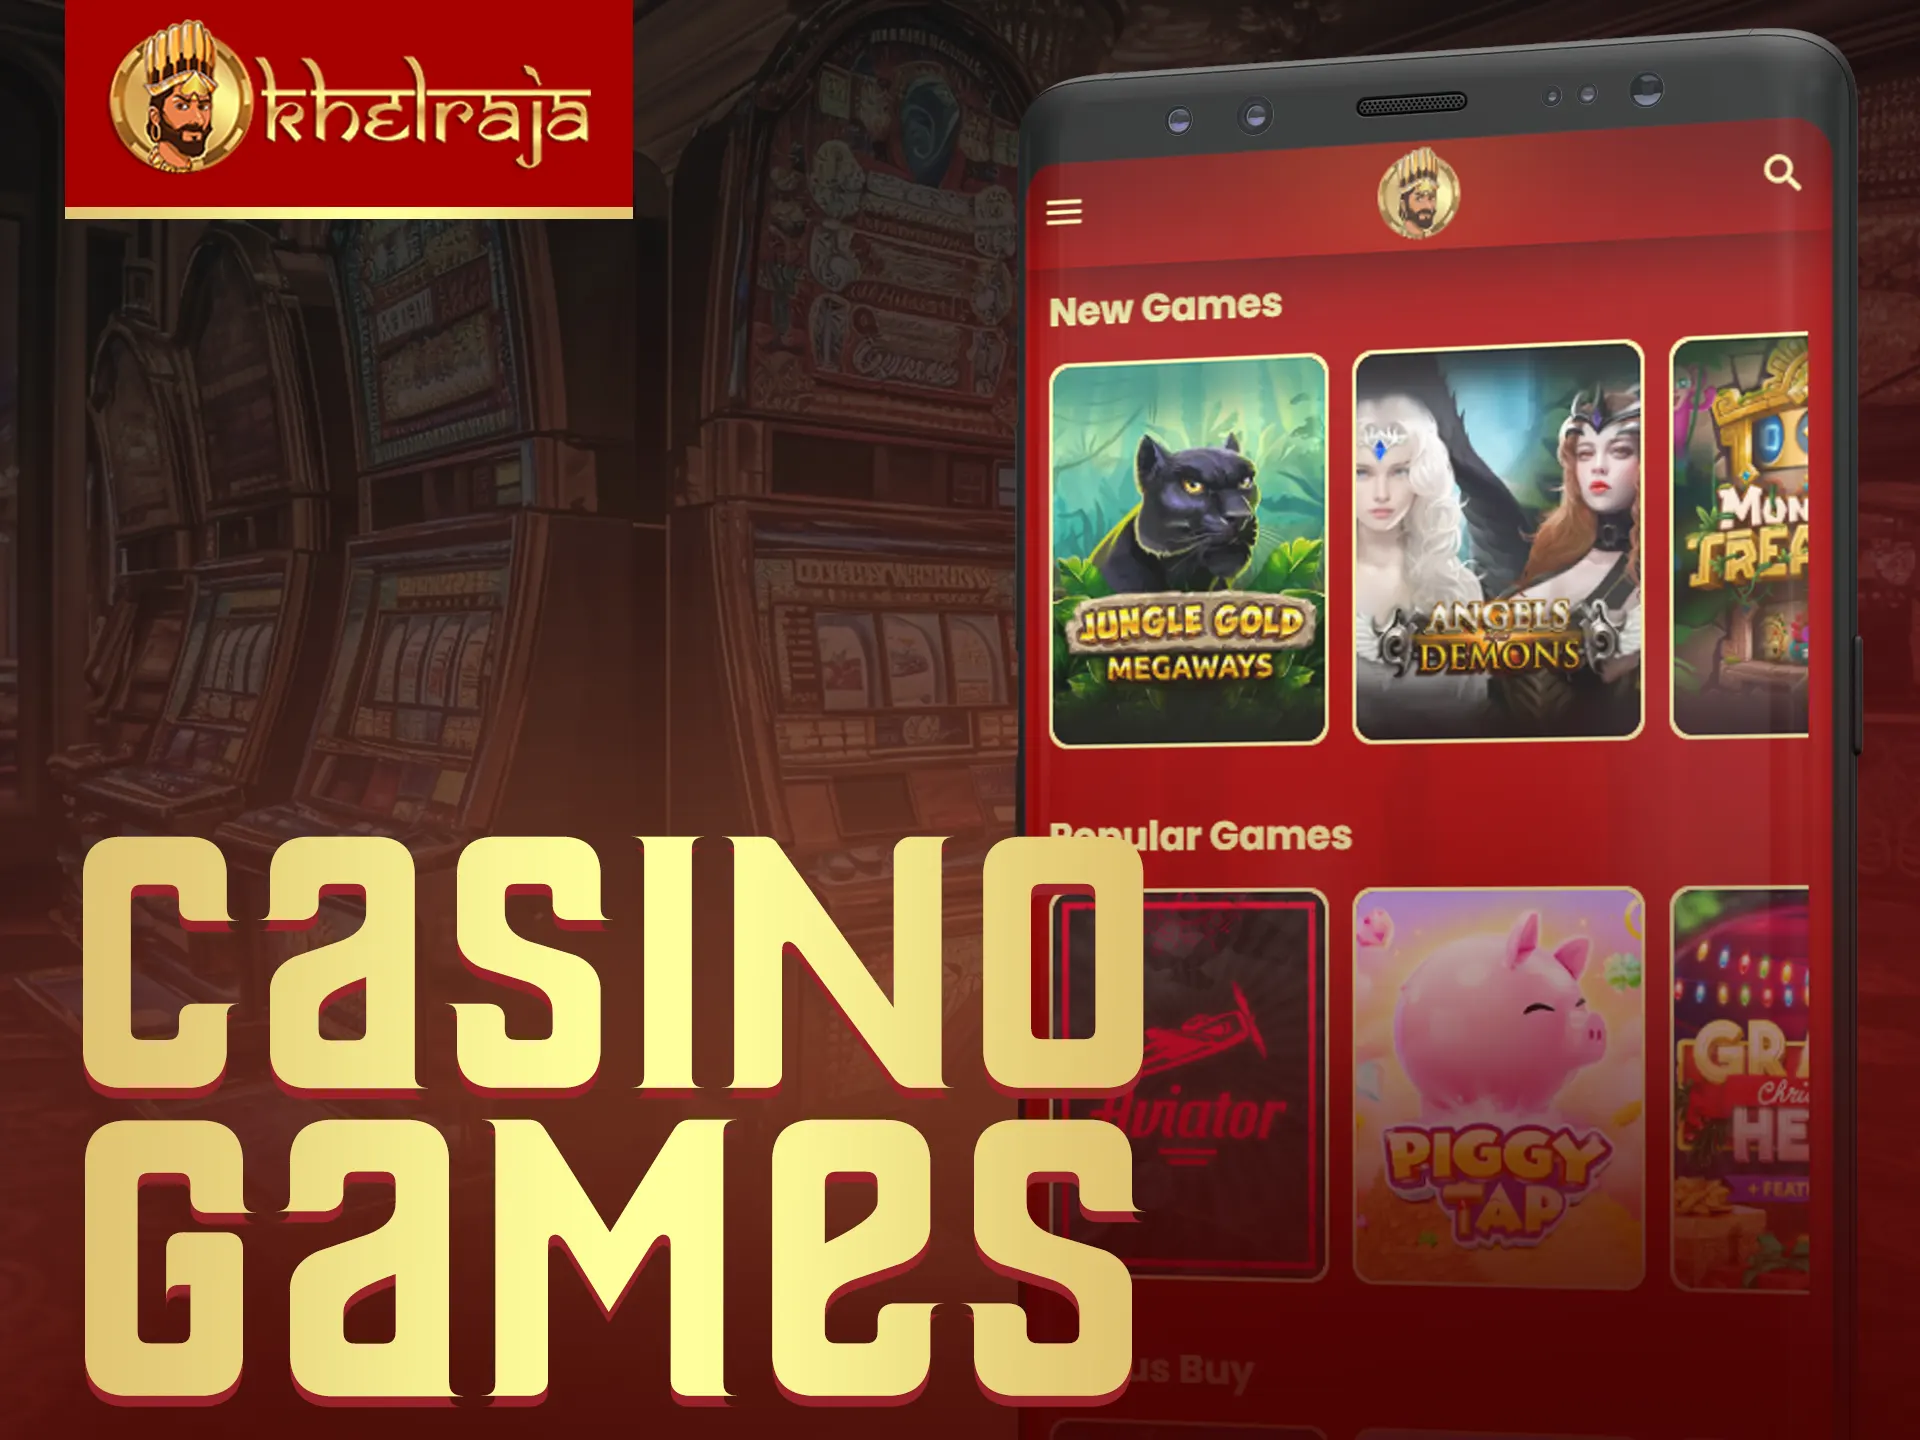 Khelraja's app has diverse casino games.